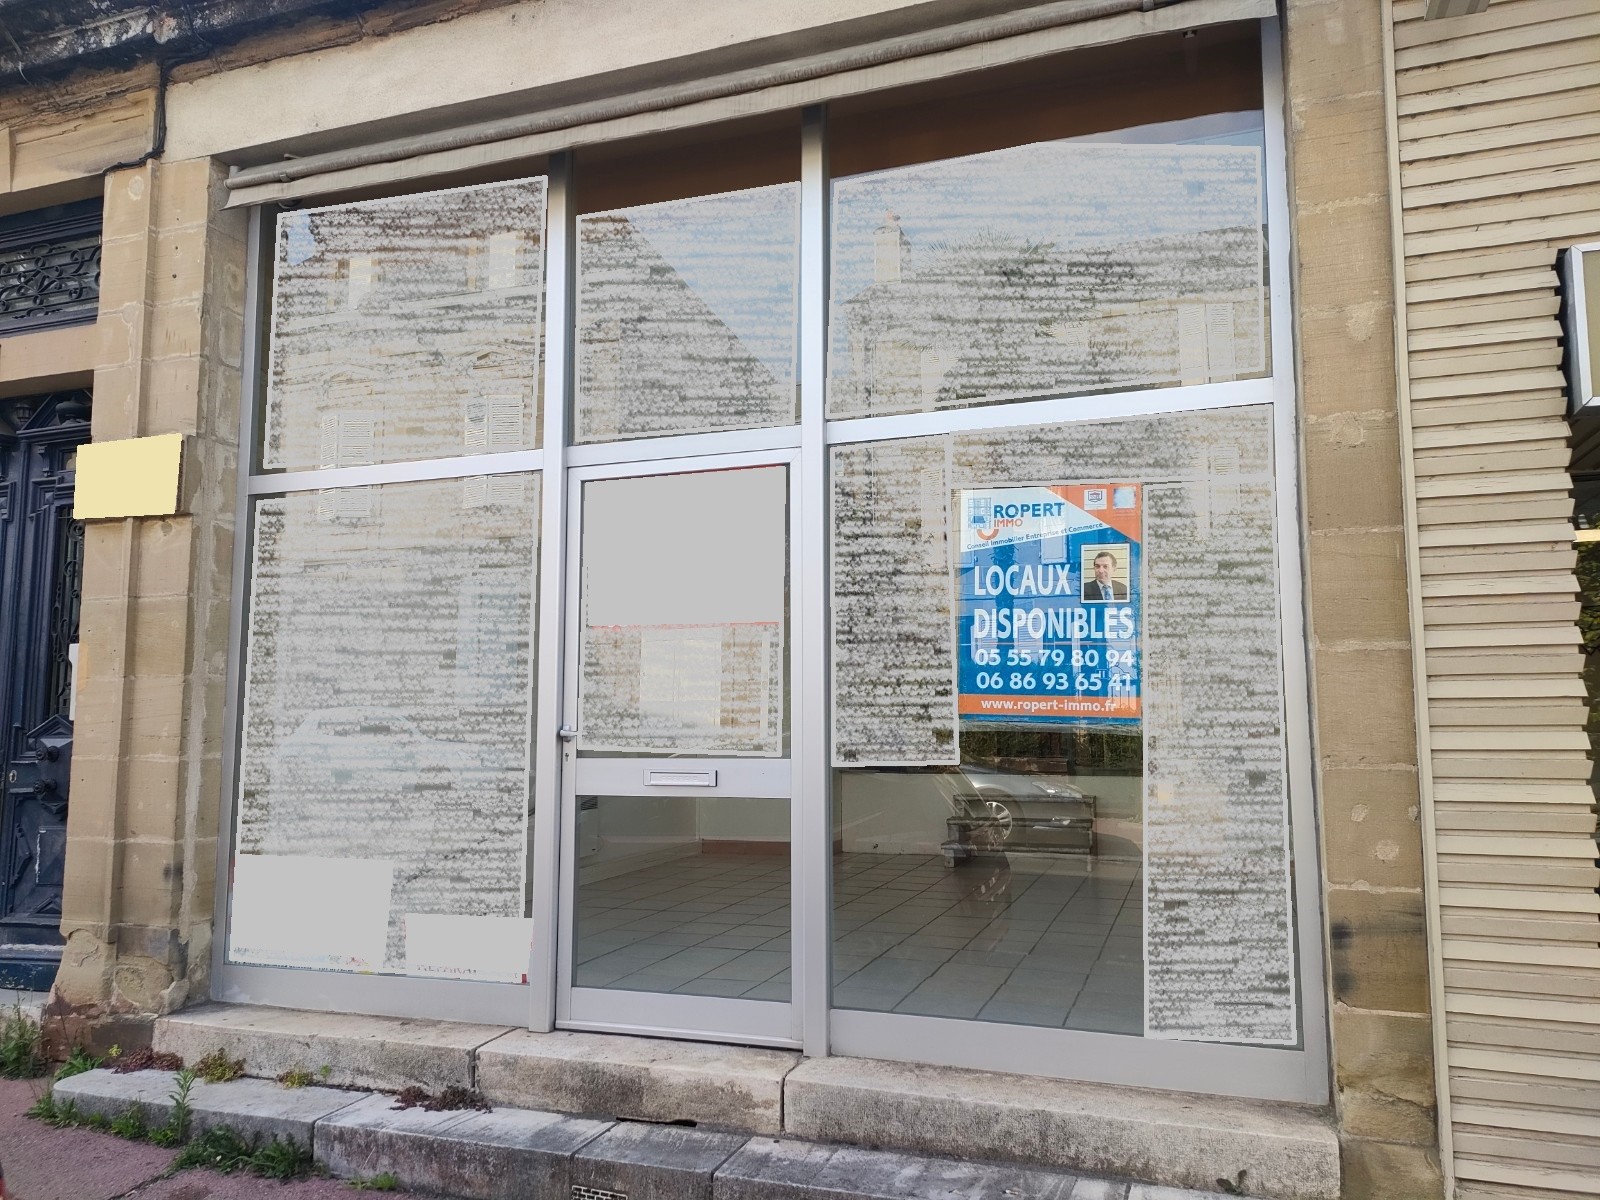 Location Bureau / Commerce à Brive-la-Gaillarde 0 pièce